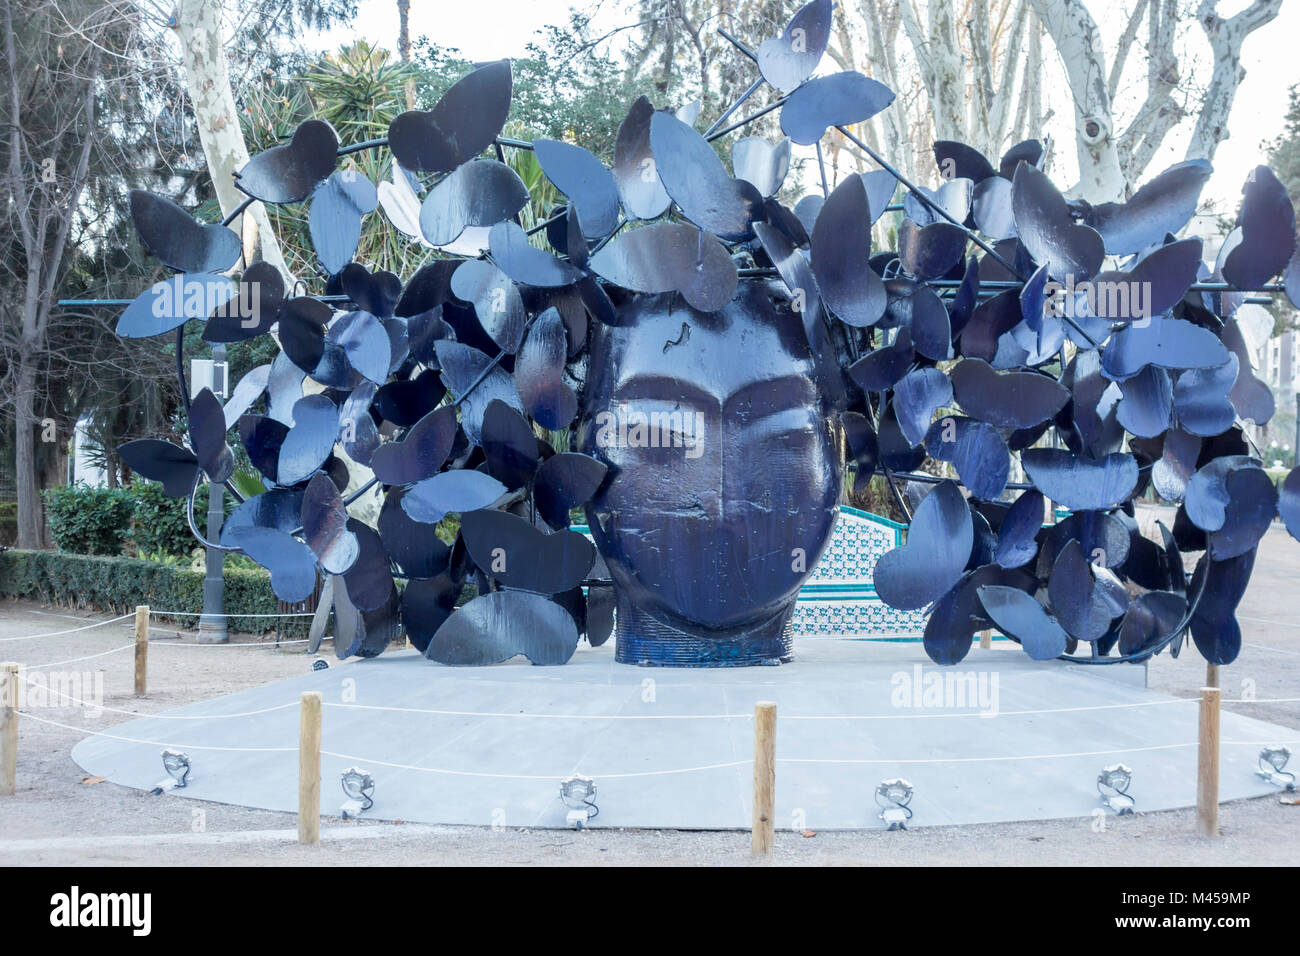 Park, Parque Ribalta, public garden city center,sculpture Butterflies by artist Manolo Valdes.Castellon,Spain. Stock Photo